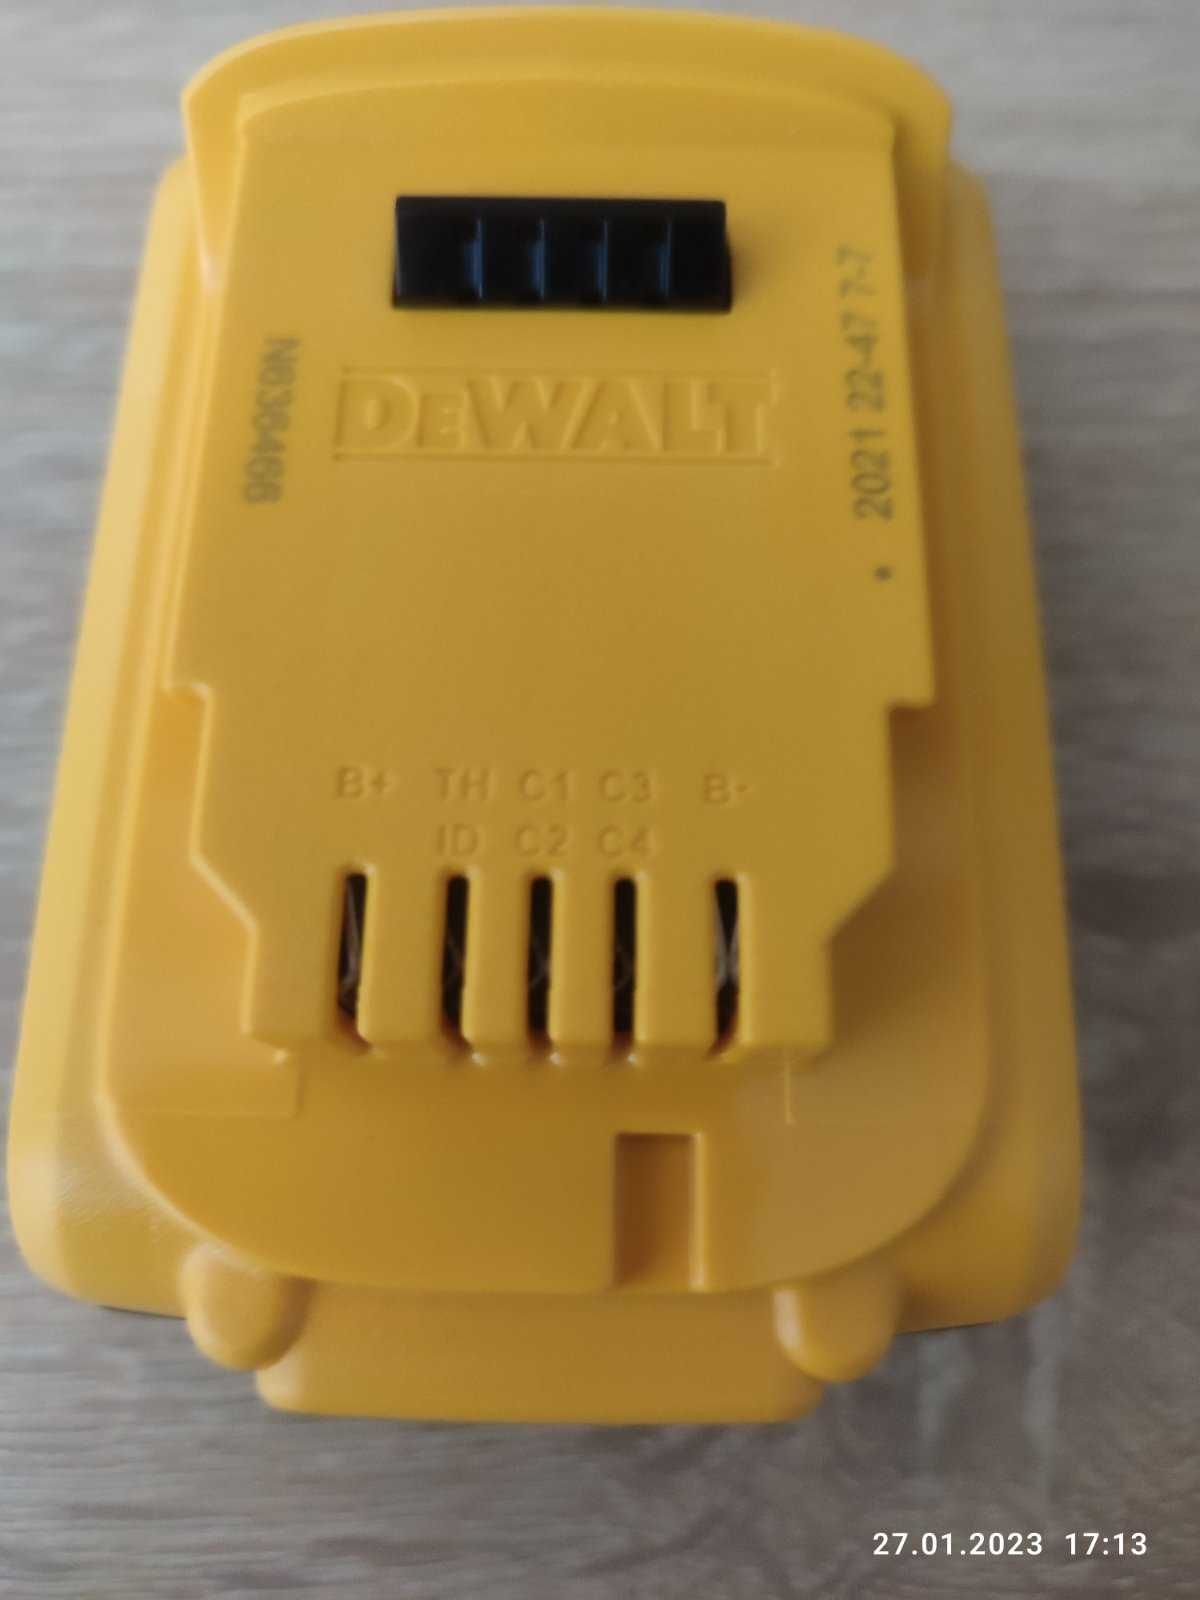 БАТАРЕЯ  DEWALT DCB184 18V/5.0АH.+
Зарядное устройство DeWalt DCB115